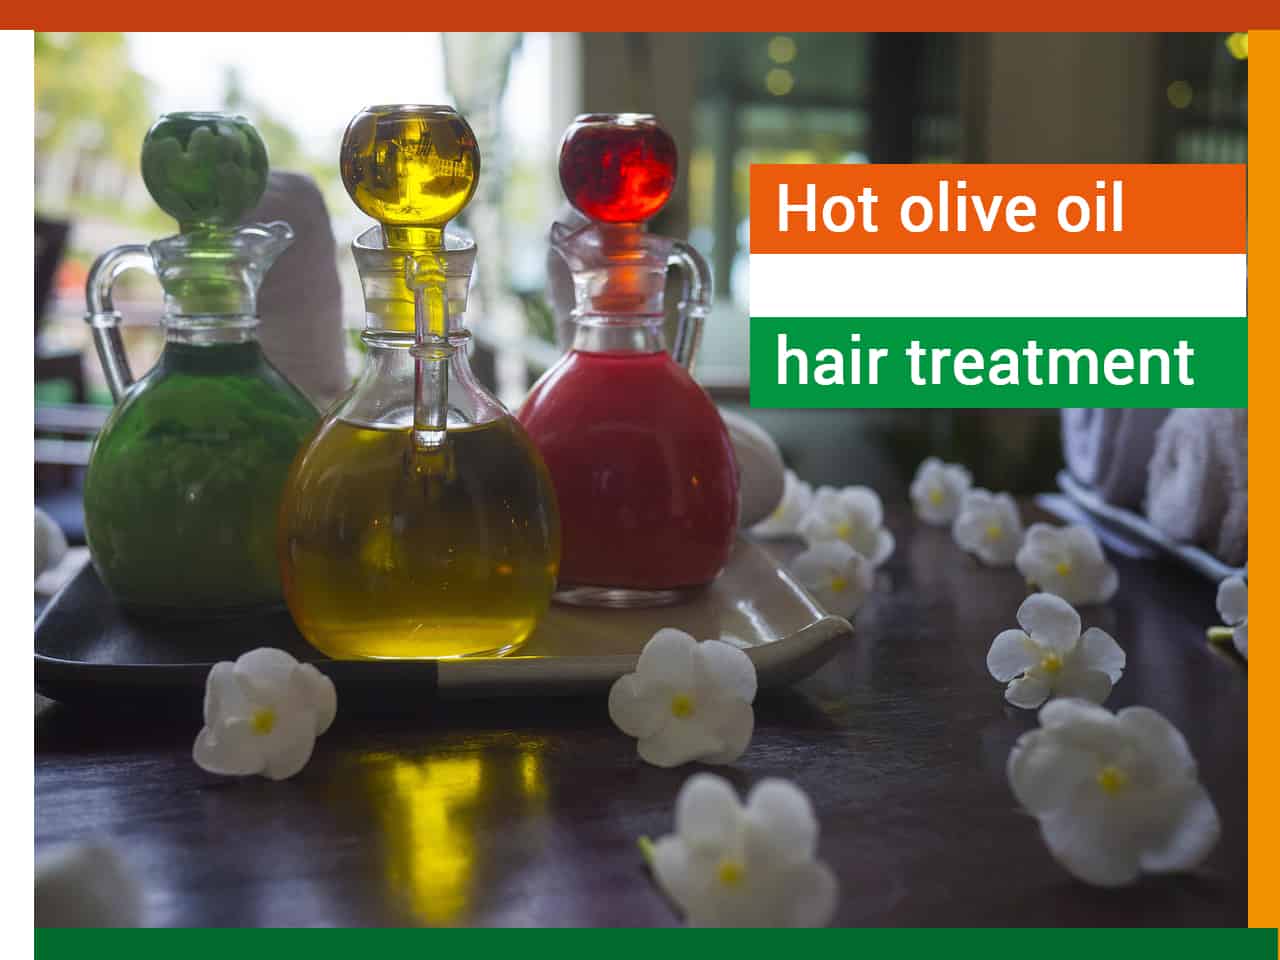 Hot olive oil hair treatment